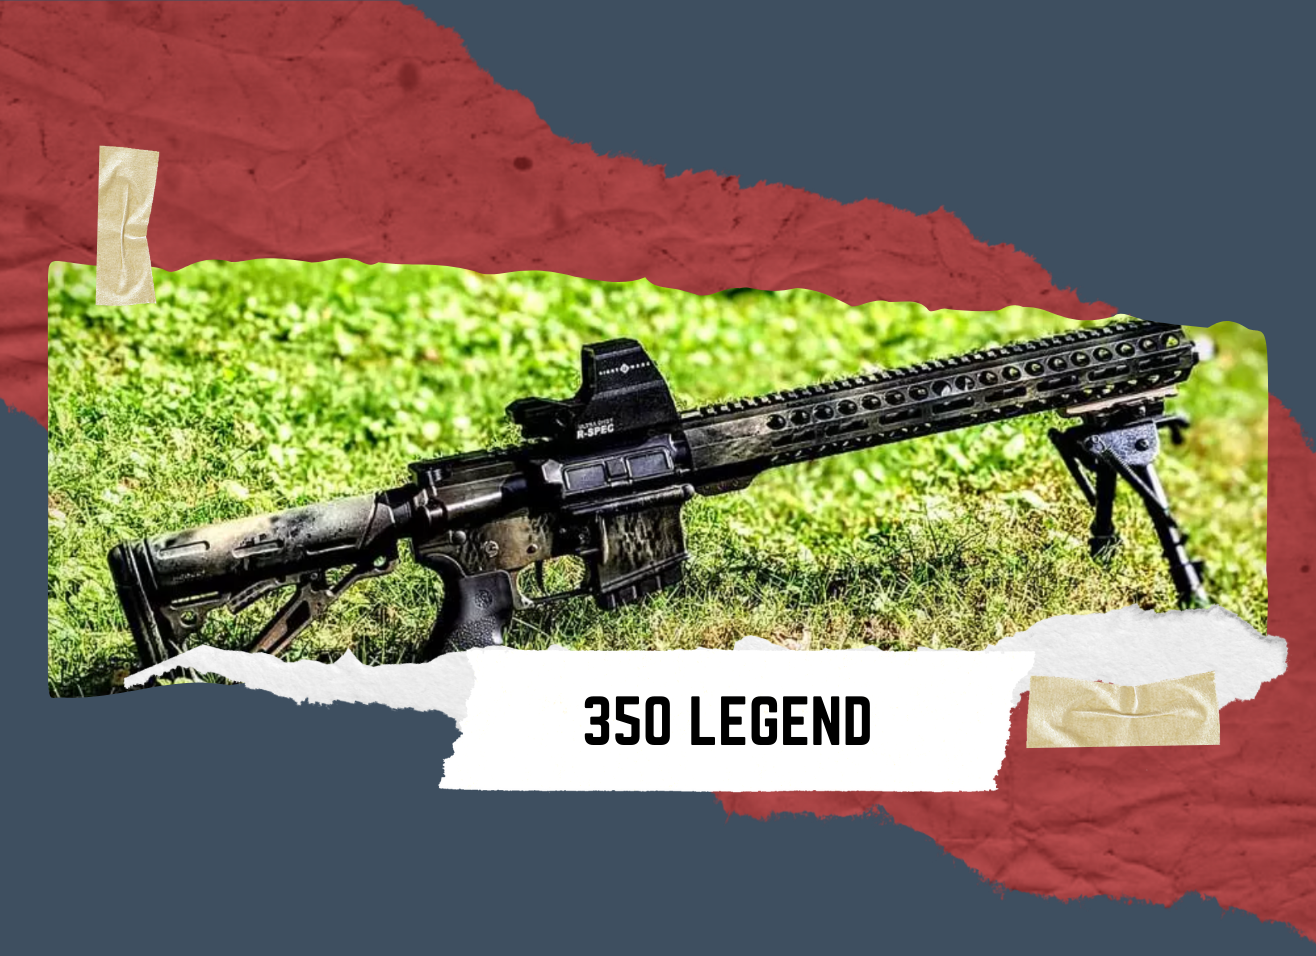 350 Legend